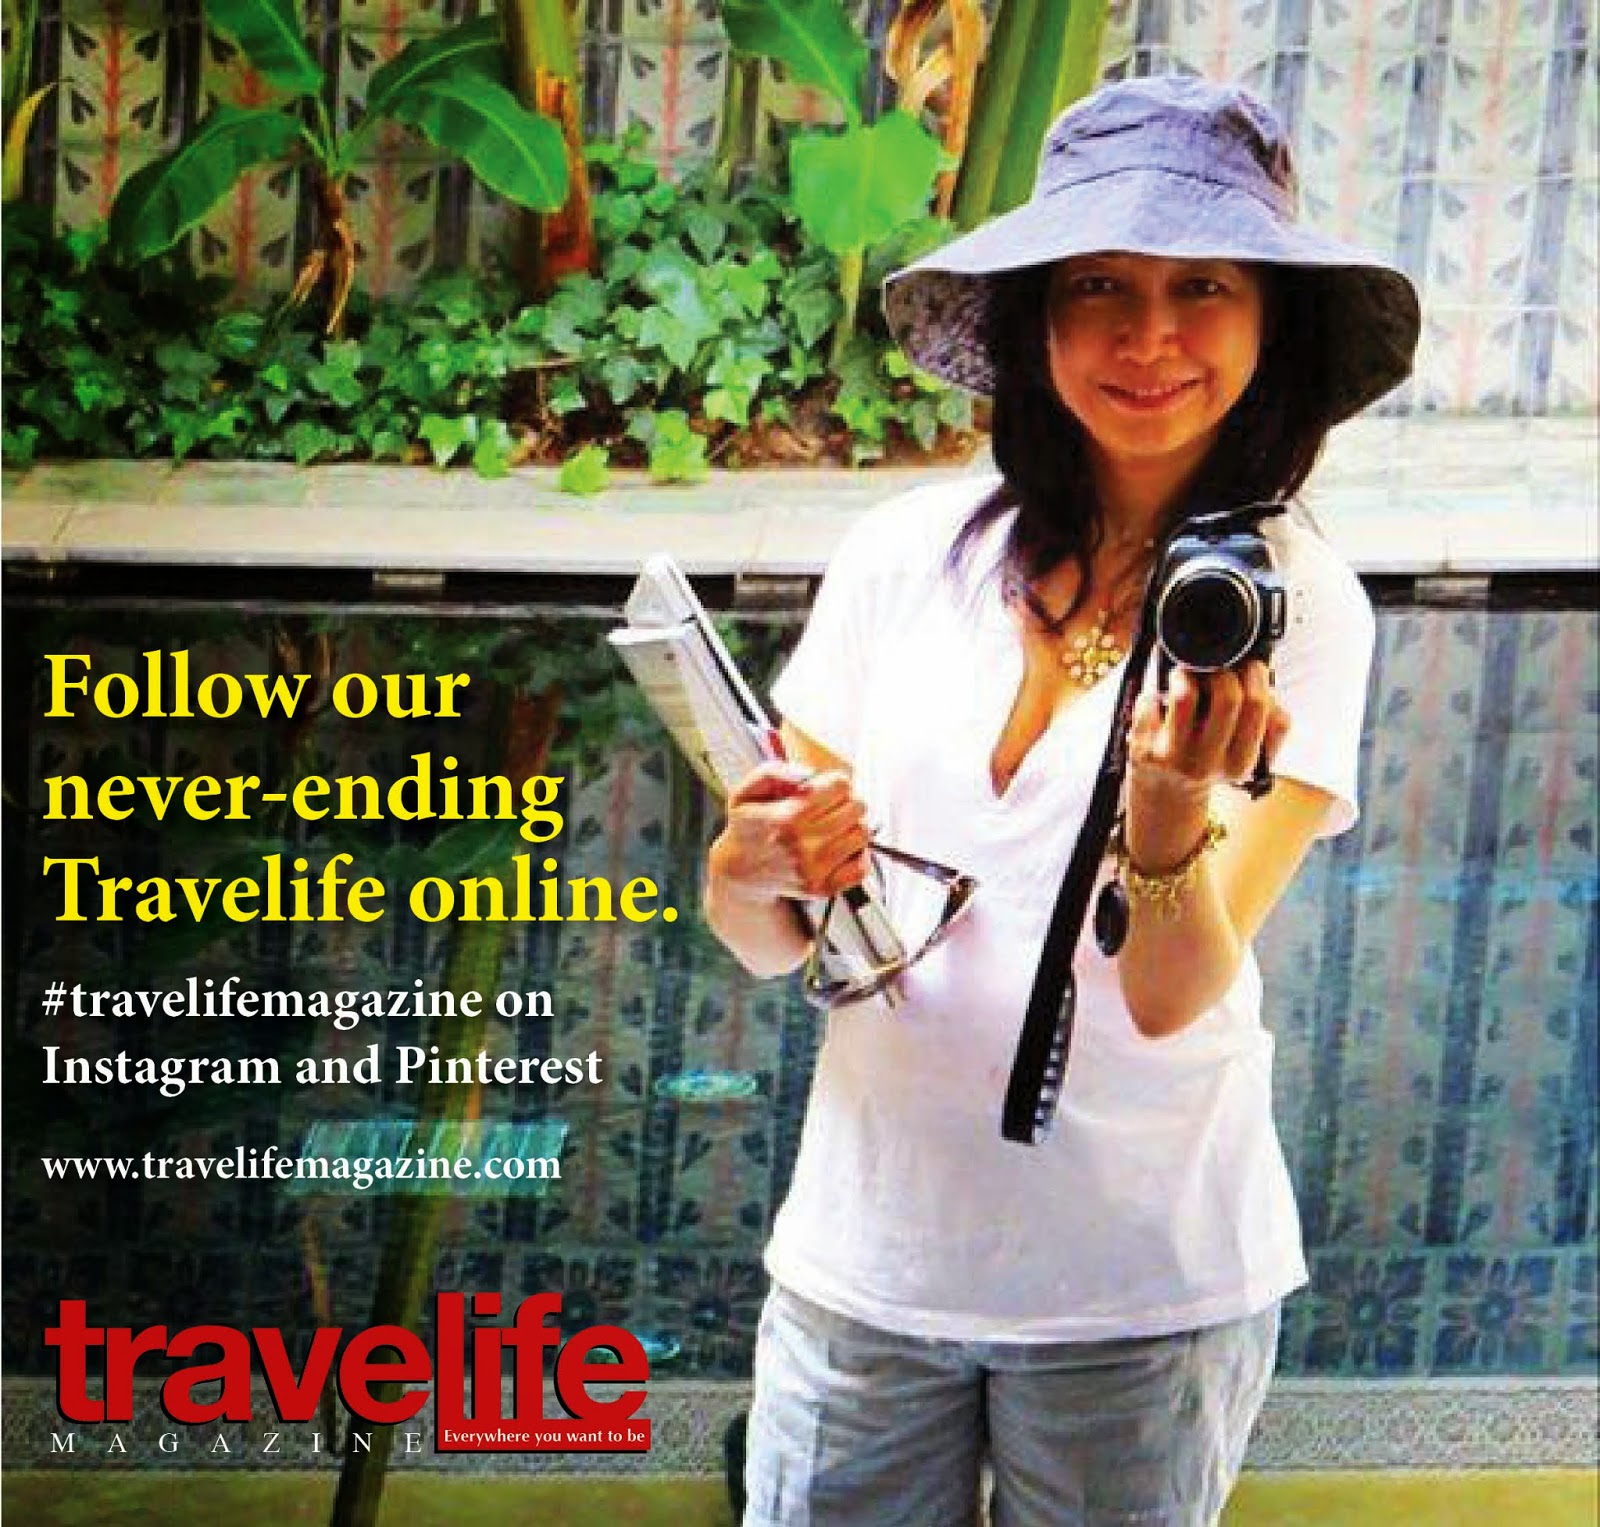 Travelife Magazine Publisher Christine Cunanan